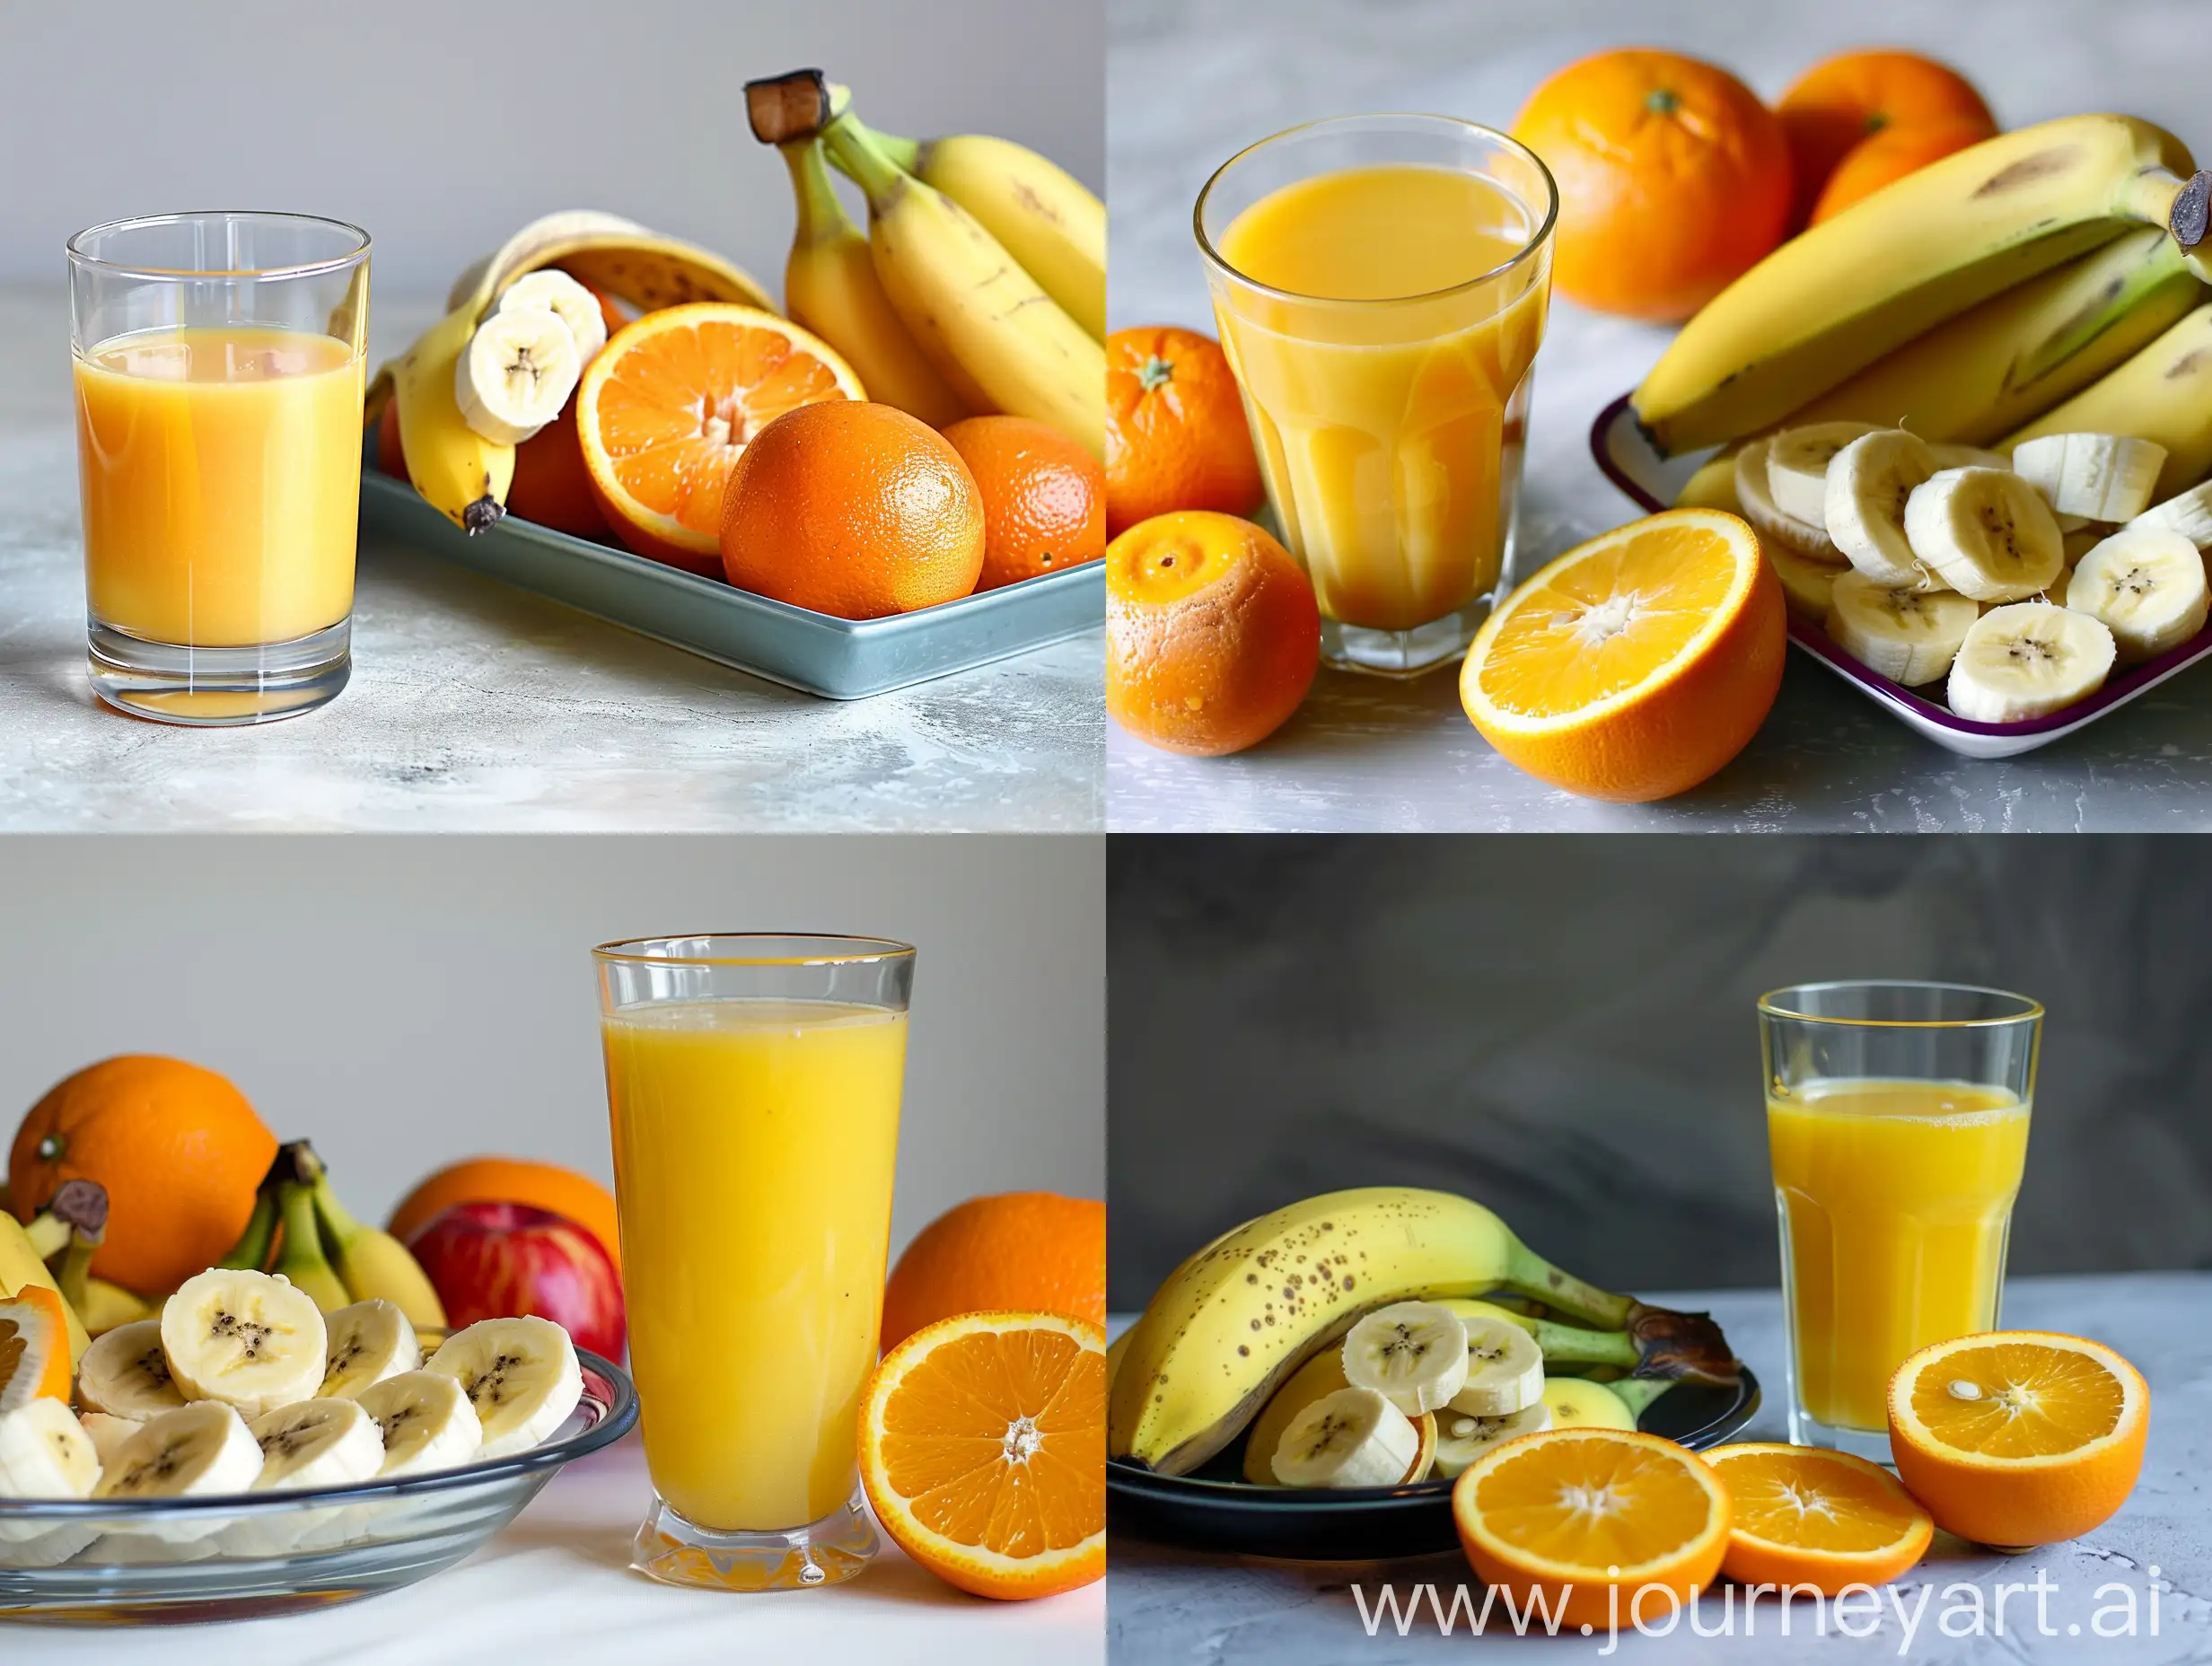 Refreshing-Banana-and-Orange-Juice-Served-with-Fresh-Fruits